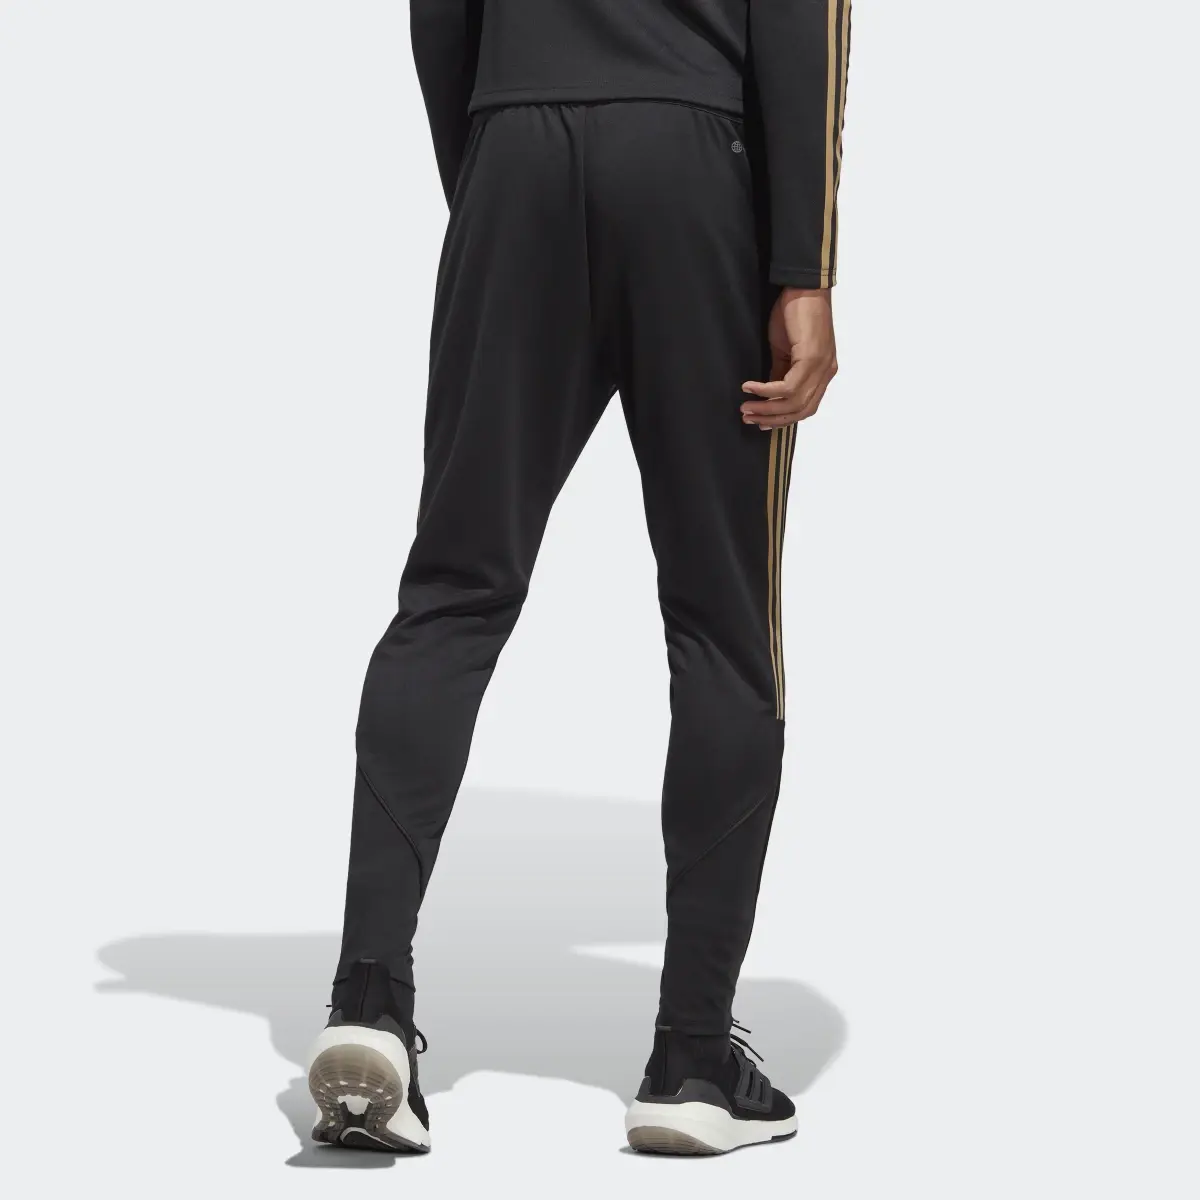 Adidas Tiro Reflective Pants. 2